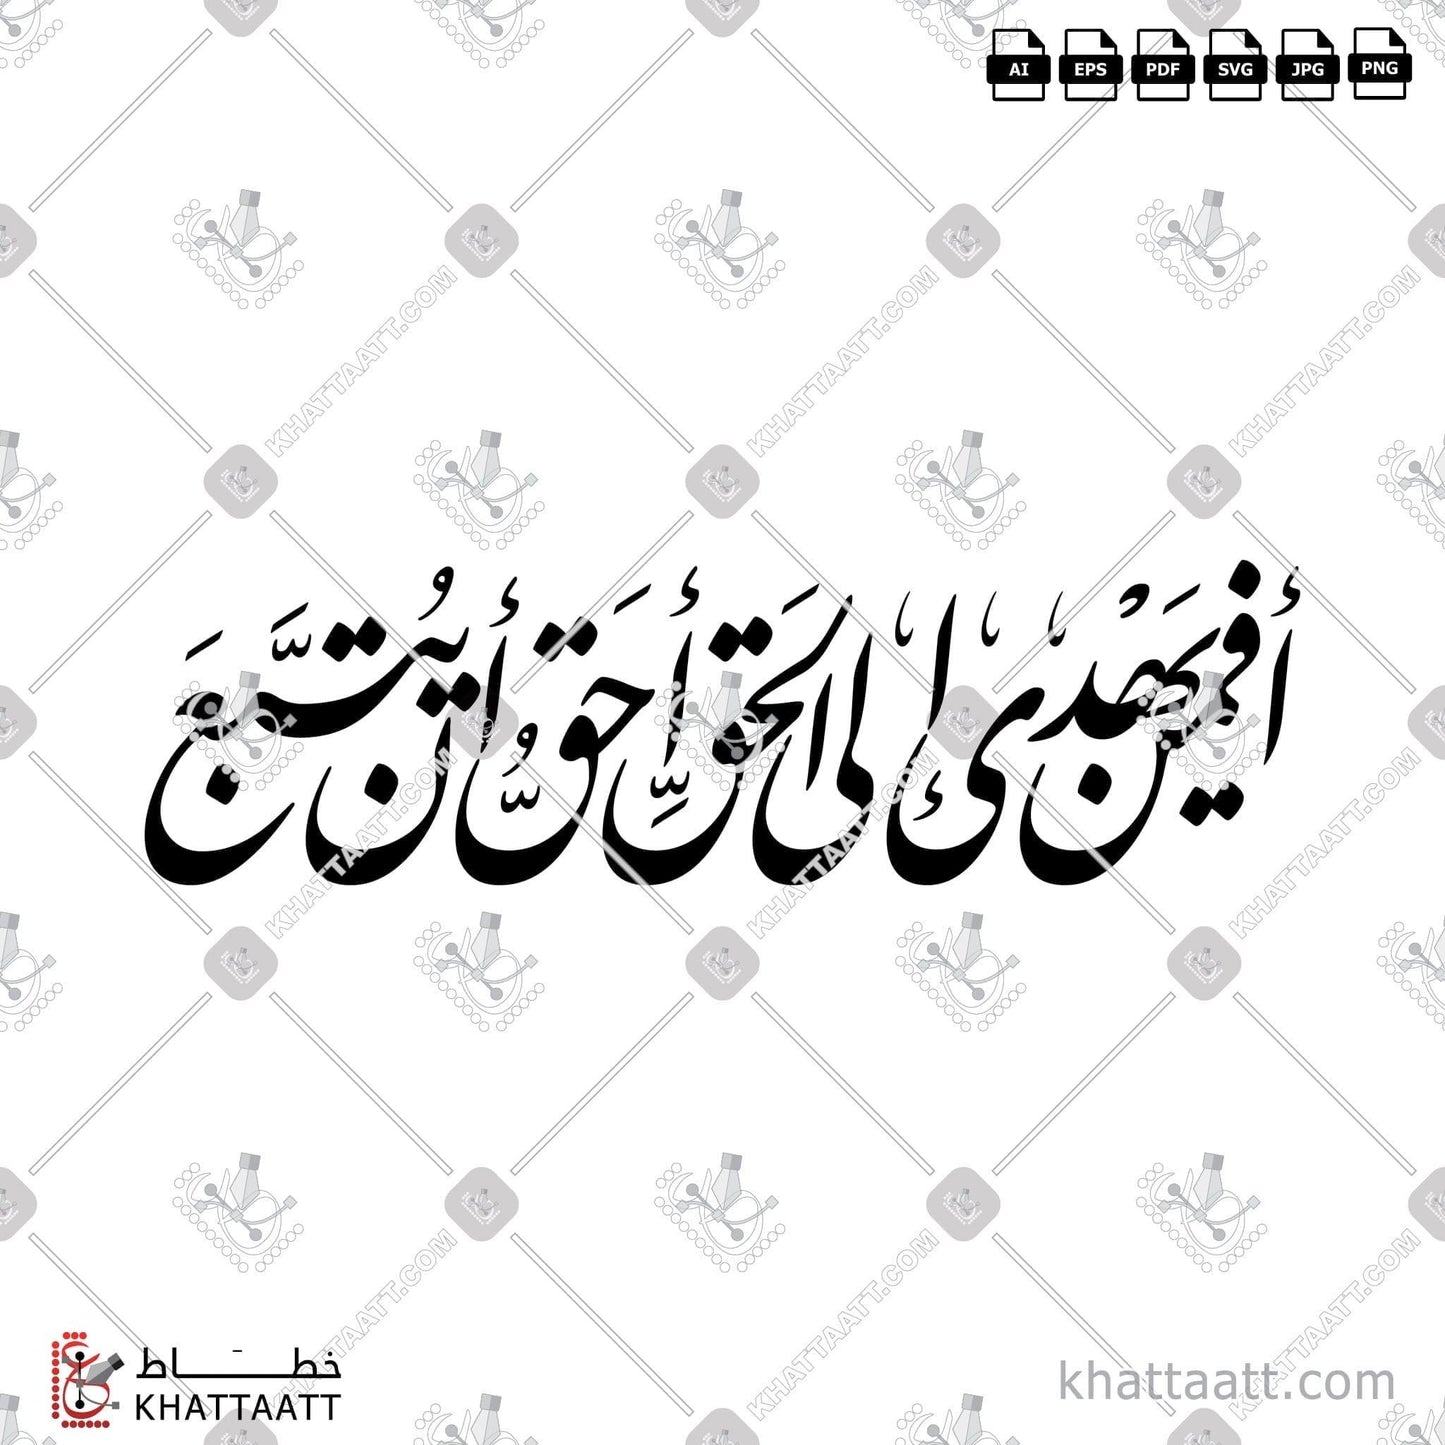 Download Arabic Calligraphy of أفمن يهدى إلى الحق أحق أن يتبع in Farsi - الخط الفارسي in vector and .png